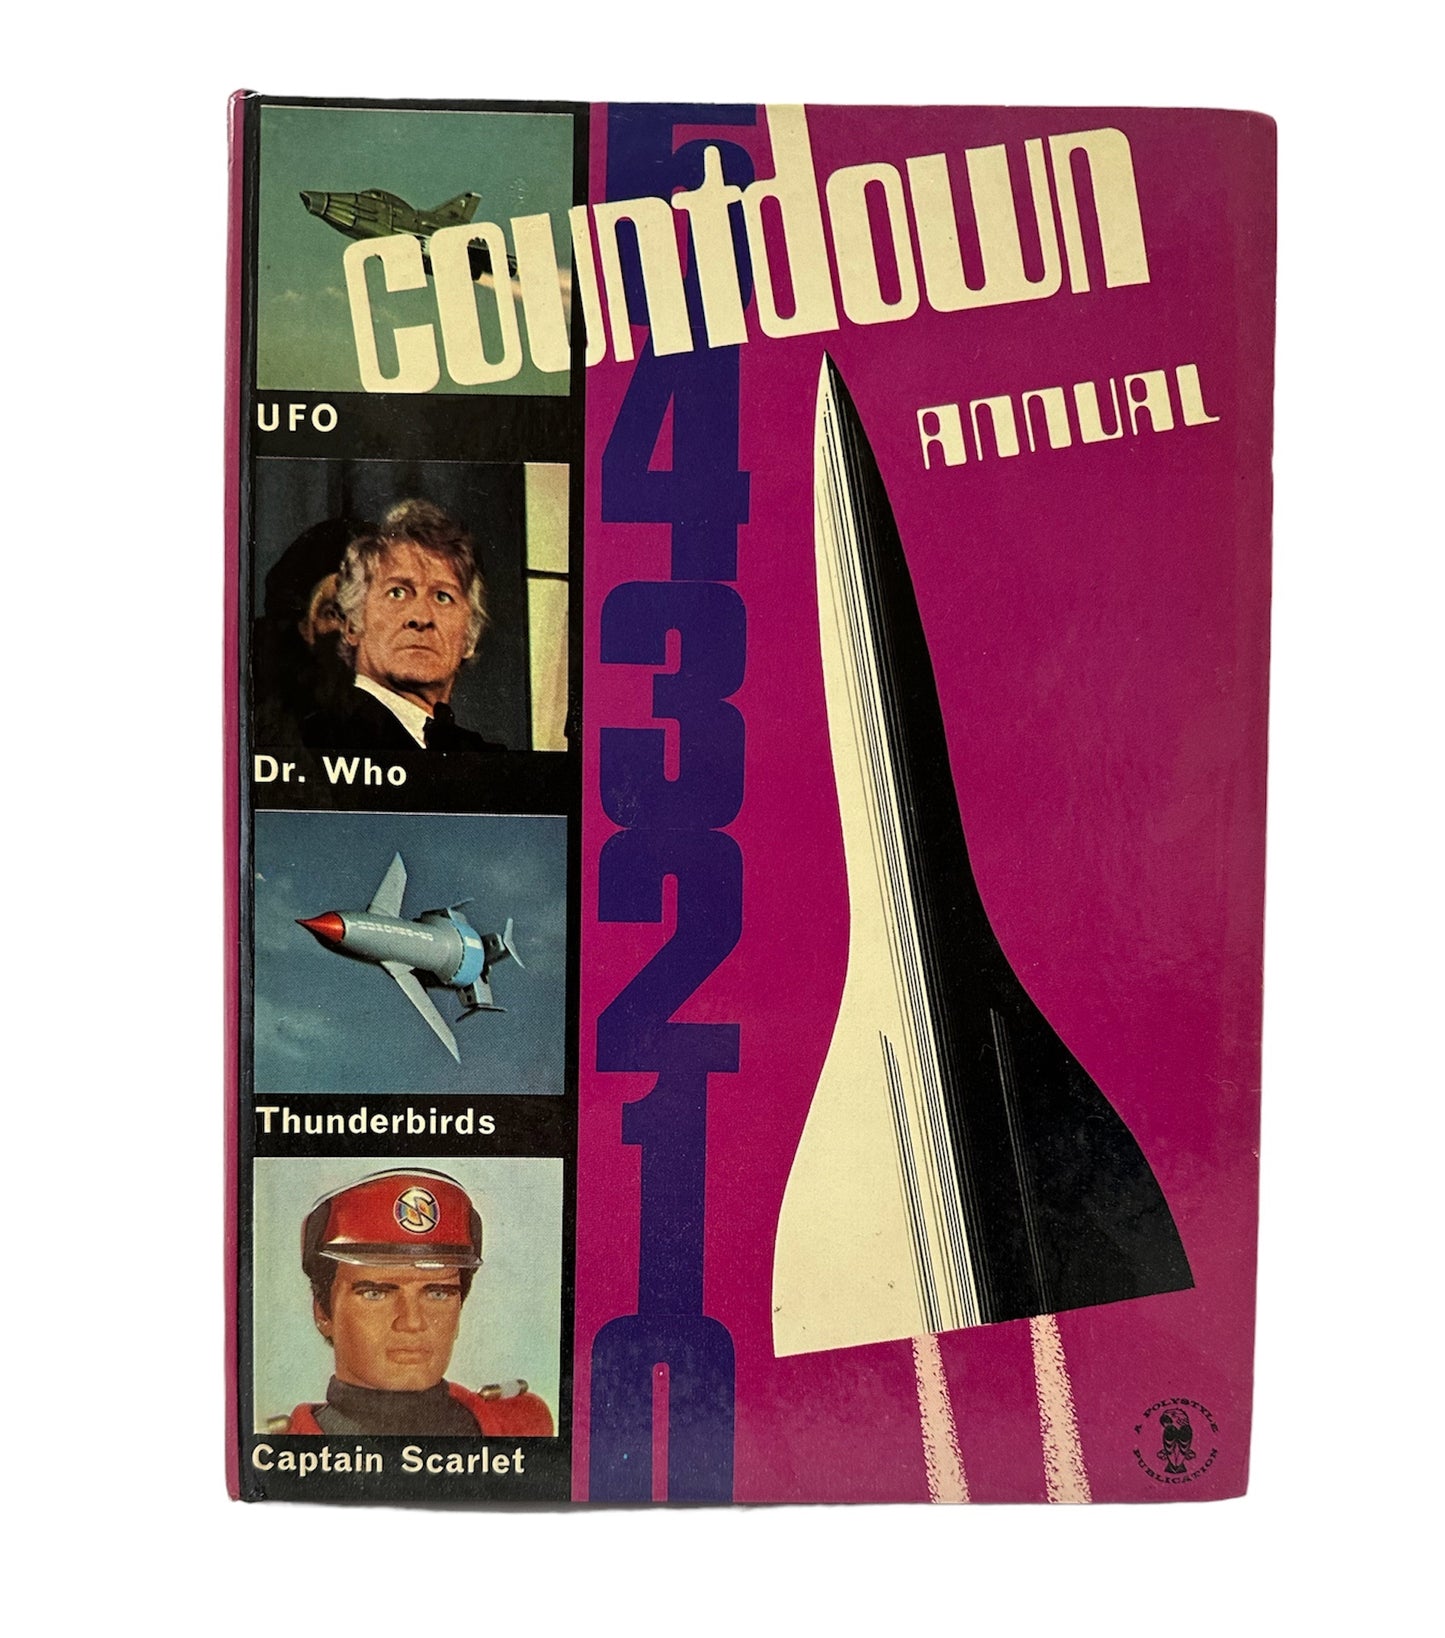 Vintage Countdown Annual 1972 - Fantastic Condition Hardback Book